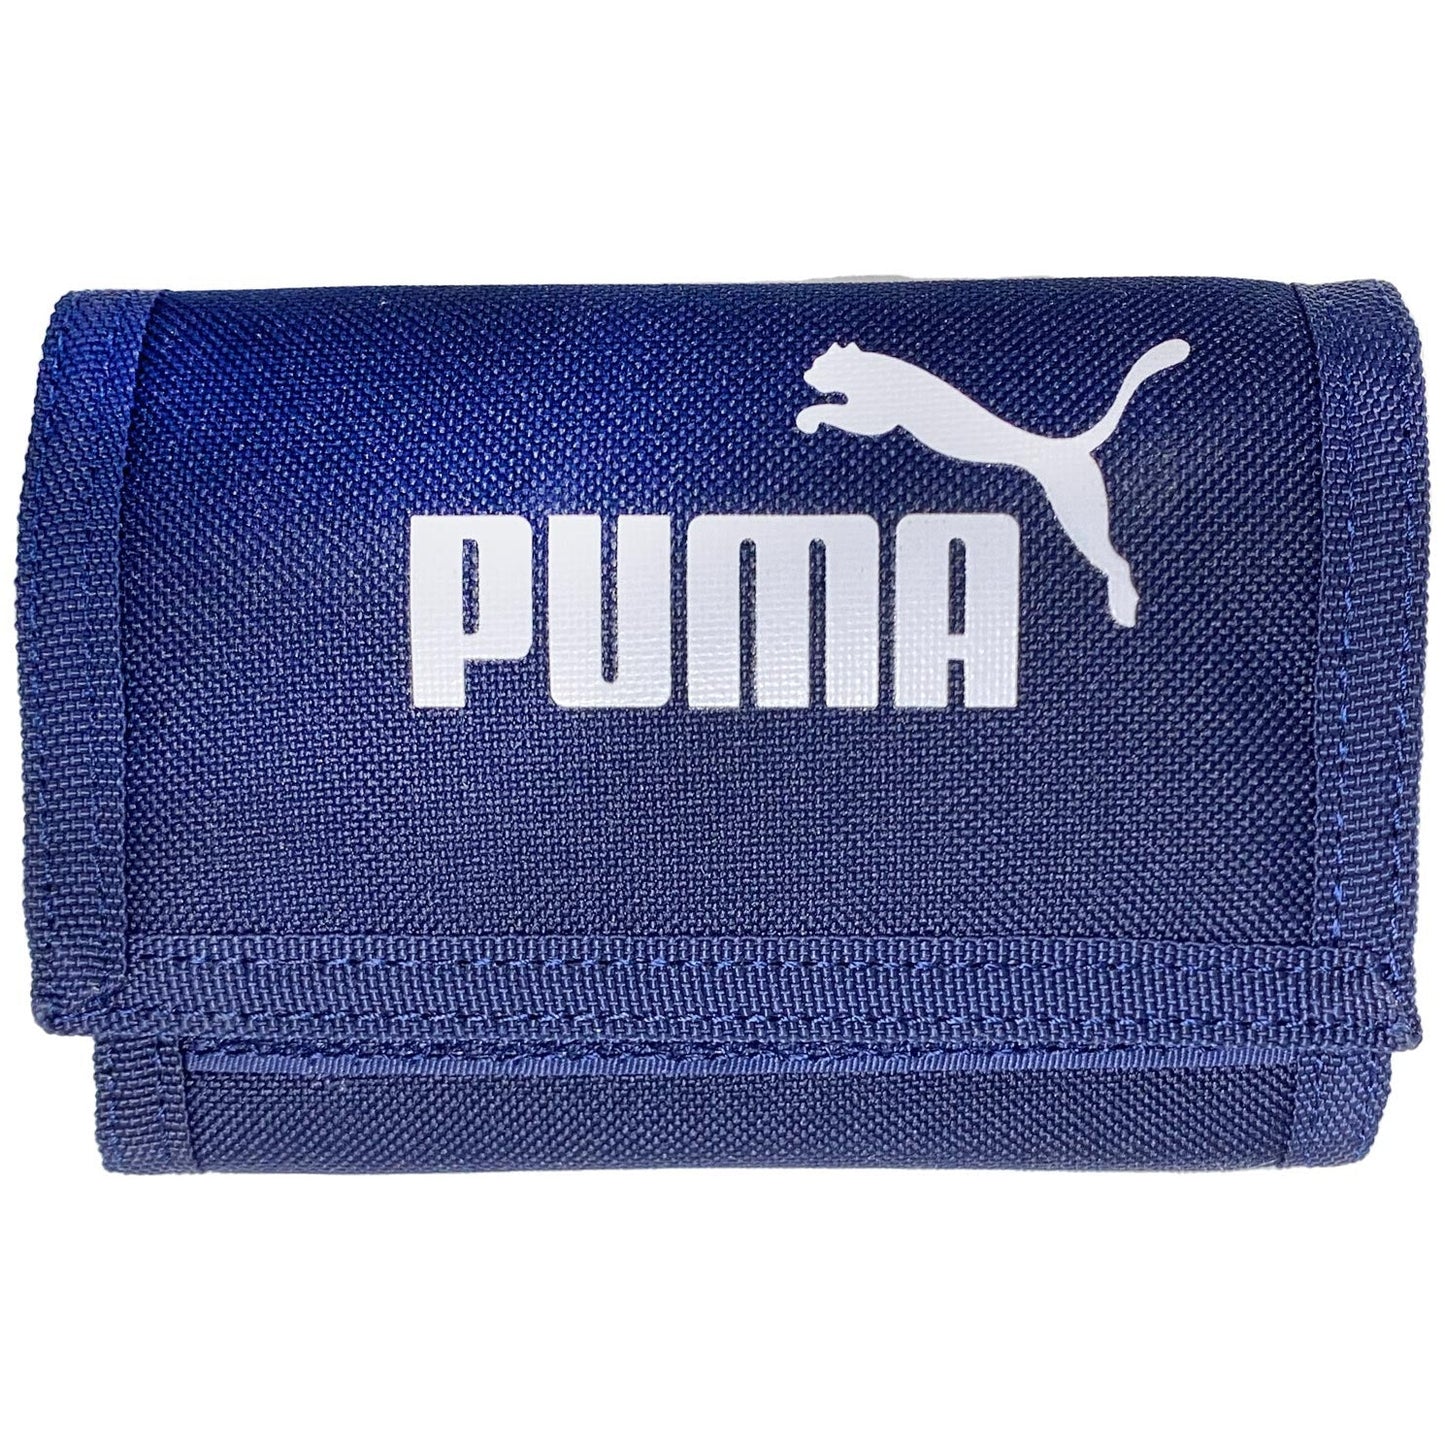 Puma Holstein Kiel Geldbörse Logo blau